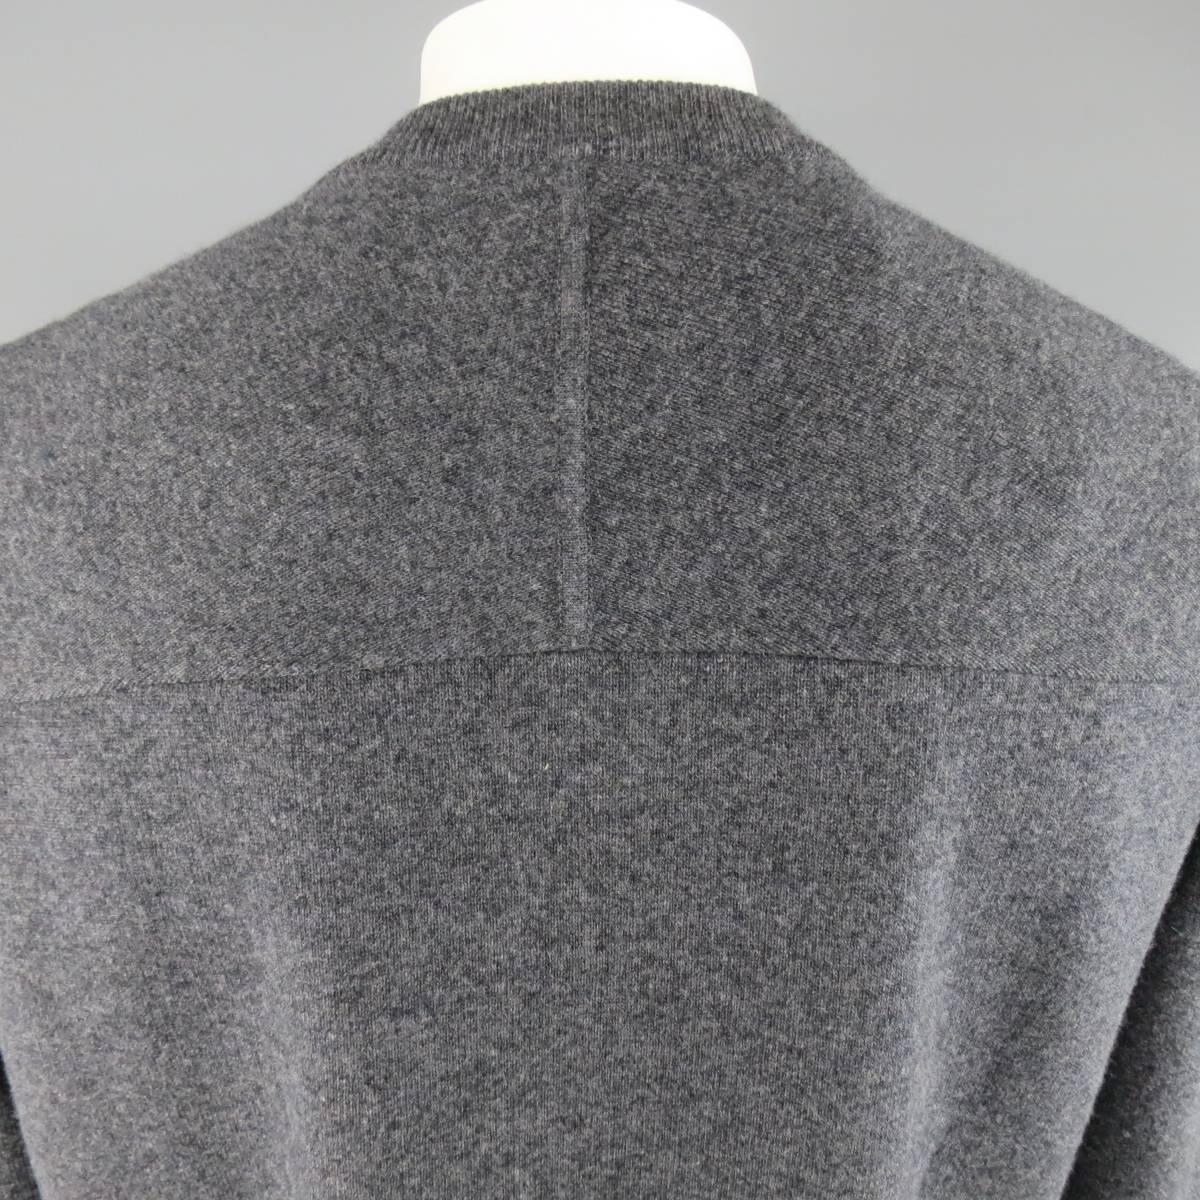 Men's JIL SANDER Sweater - Heather Gray Textured Wool / Cashmere Pullover 4